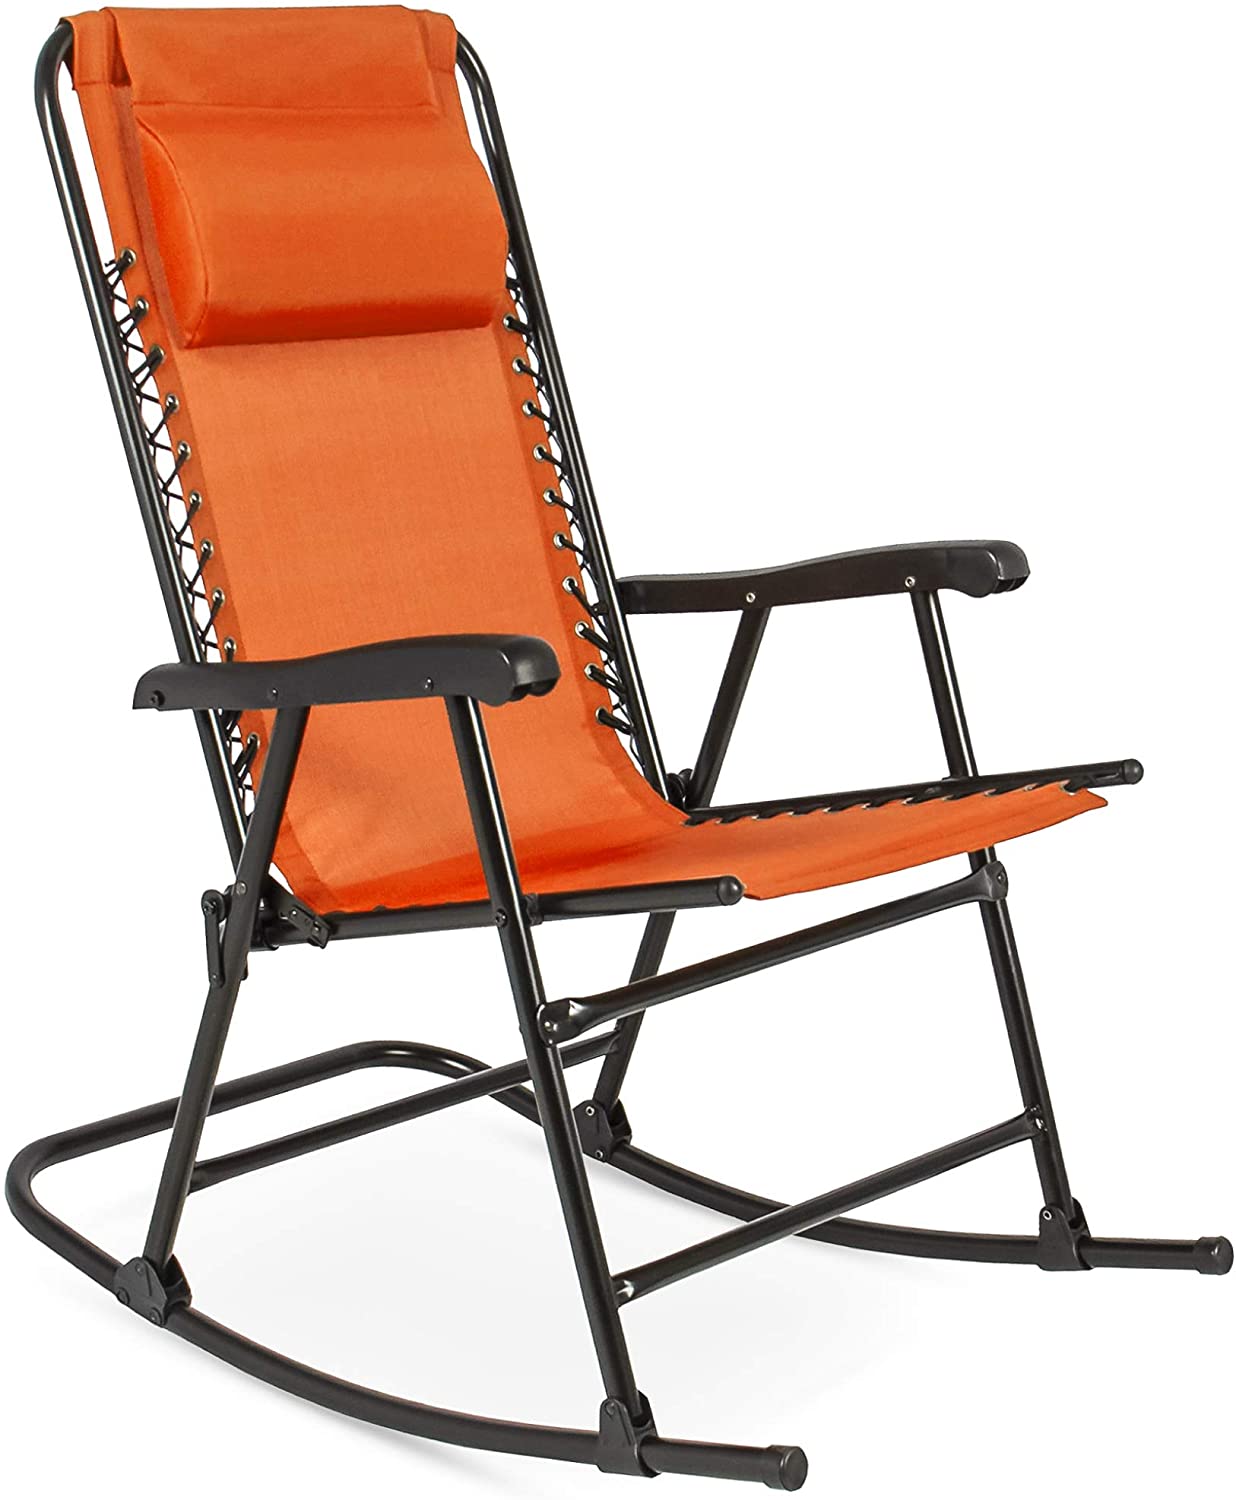 13 Best Portable Rocking Chairs (Comparison & Reviews) - Keep It Portable